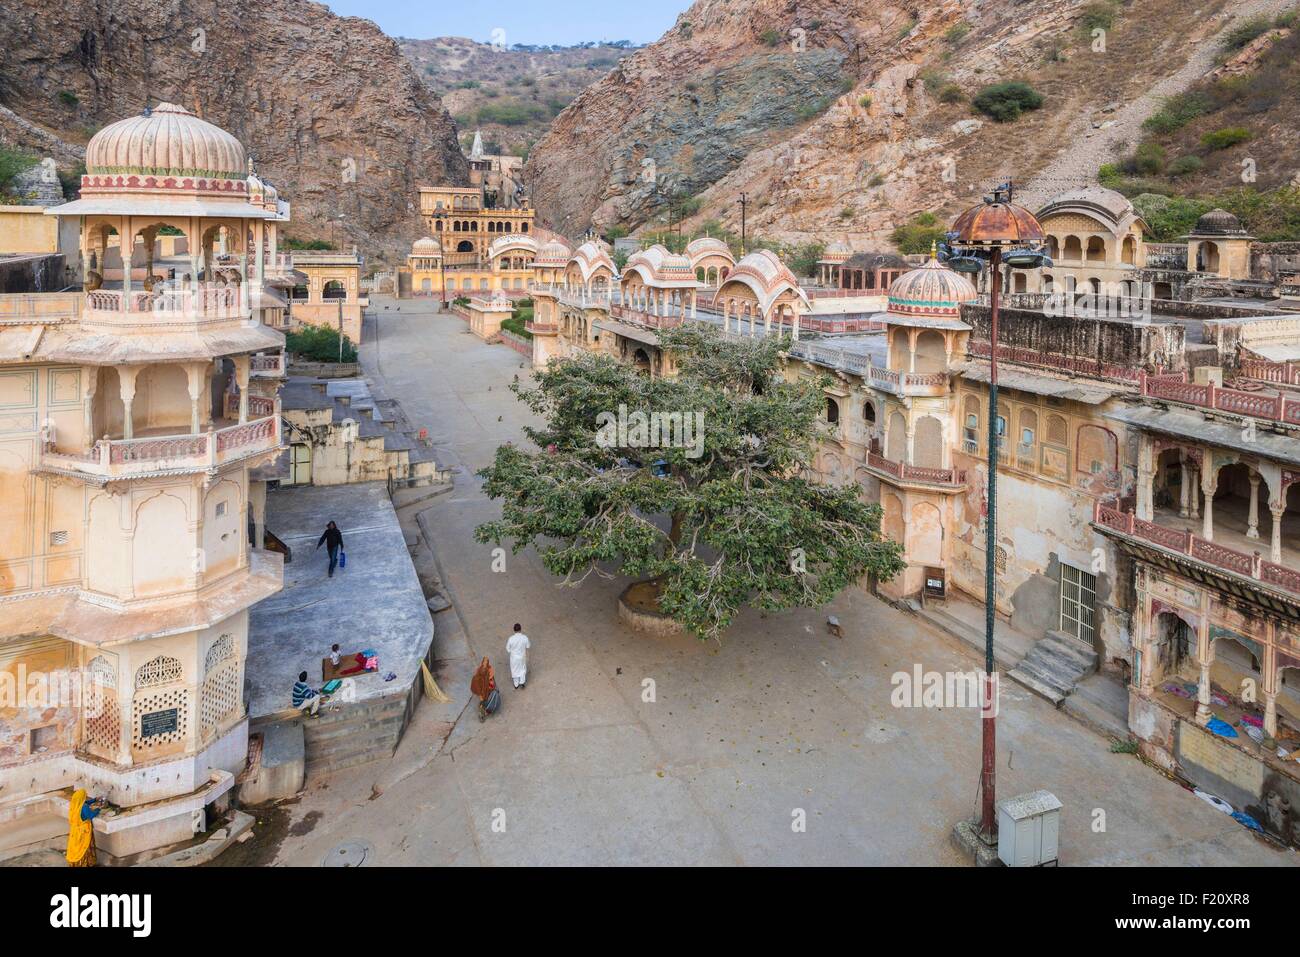 Indien, Rajasthan Zustand, Jaipur, Galta Ji Tempel dem Gott Hanuman gewidmet Stockfoto